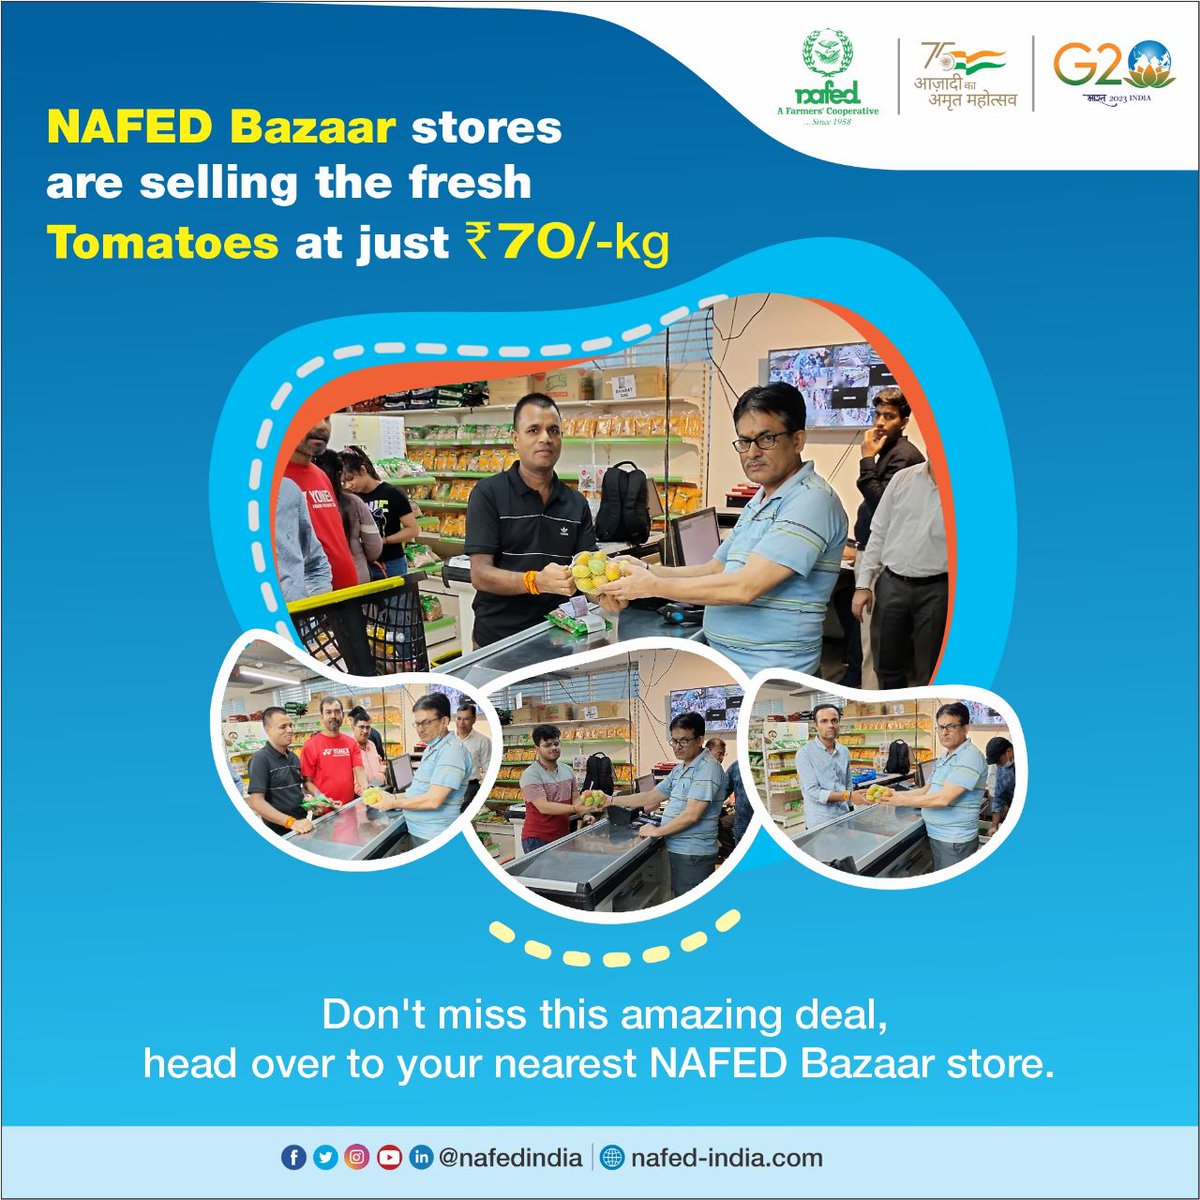 NAFED Bazaar is offering Tomatoes at Rs 70 per kg!
#EmpoweringCooperatives #SahakarSeSamriddhi #cooperativesociety #NAFED #TomatoPriceHike #TomatoesPrice #Tomatoes